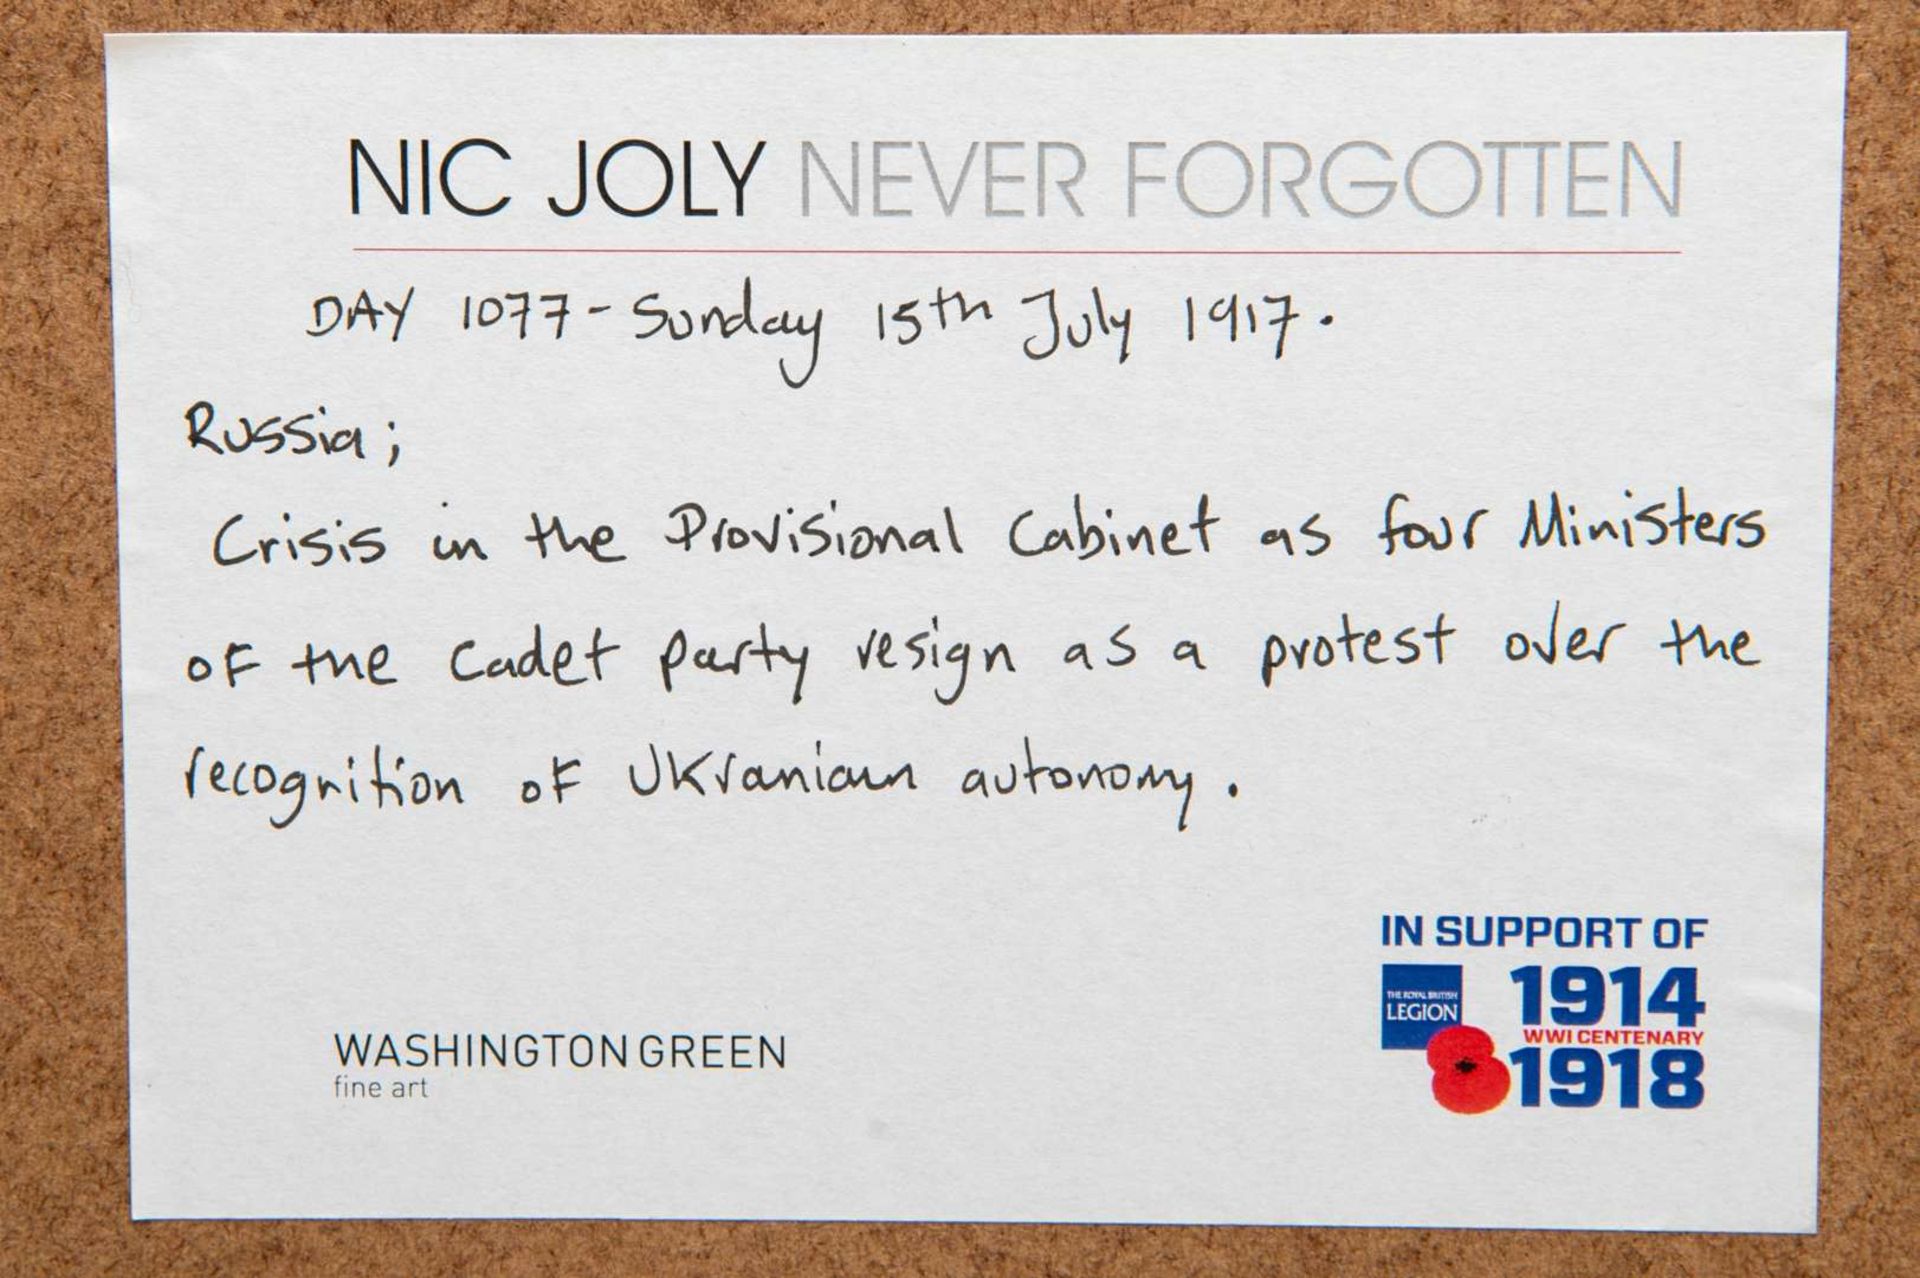 NIC JOLY, &nbsp;“NEVER FORGOTTEN, DAY 1077", mixed media. - Bild 5 aus 5